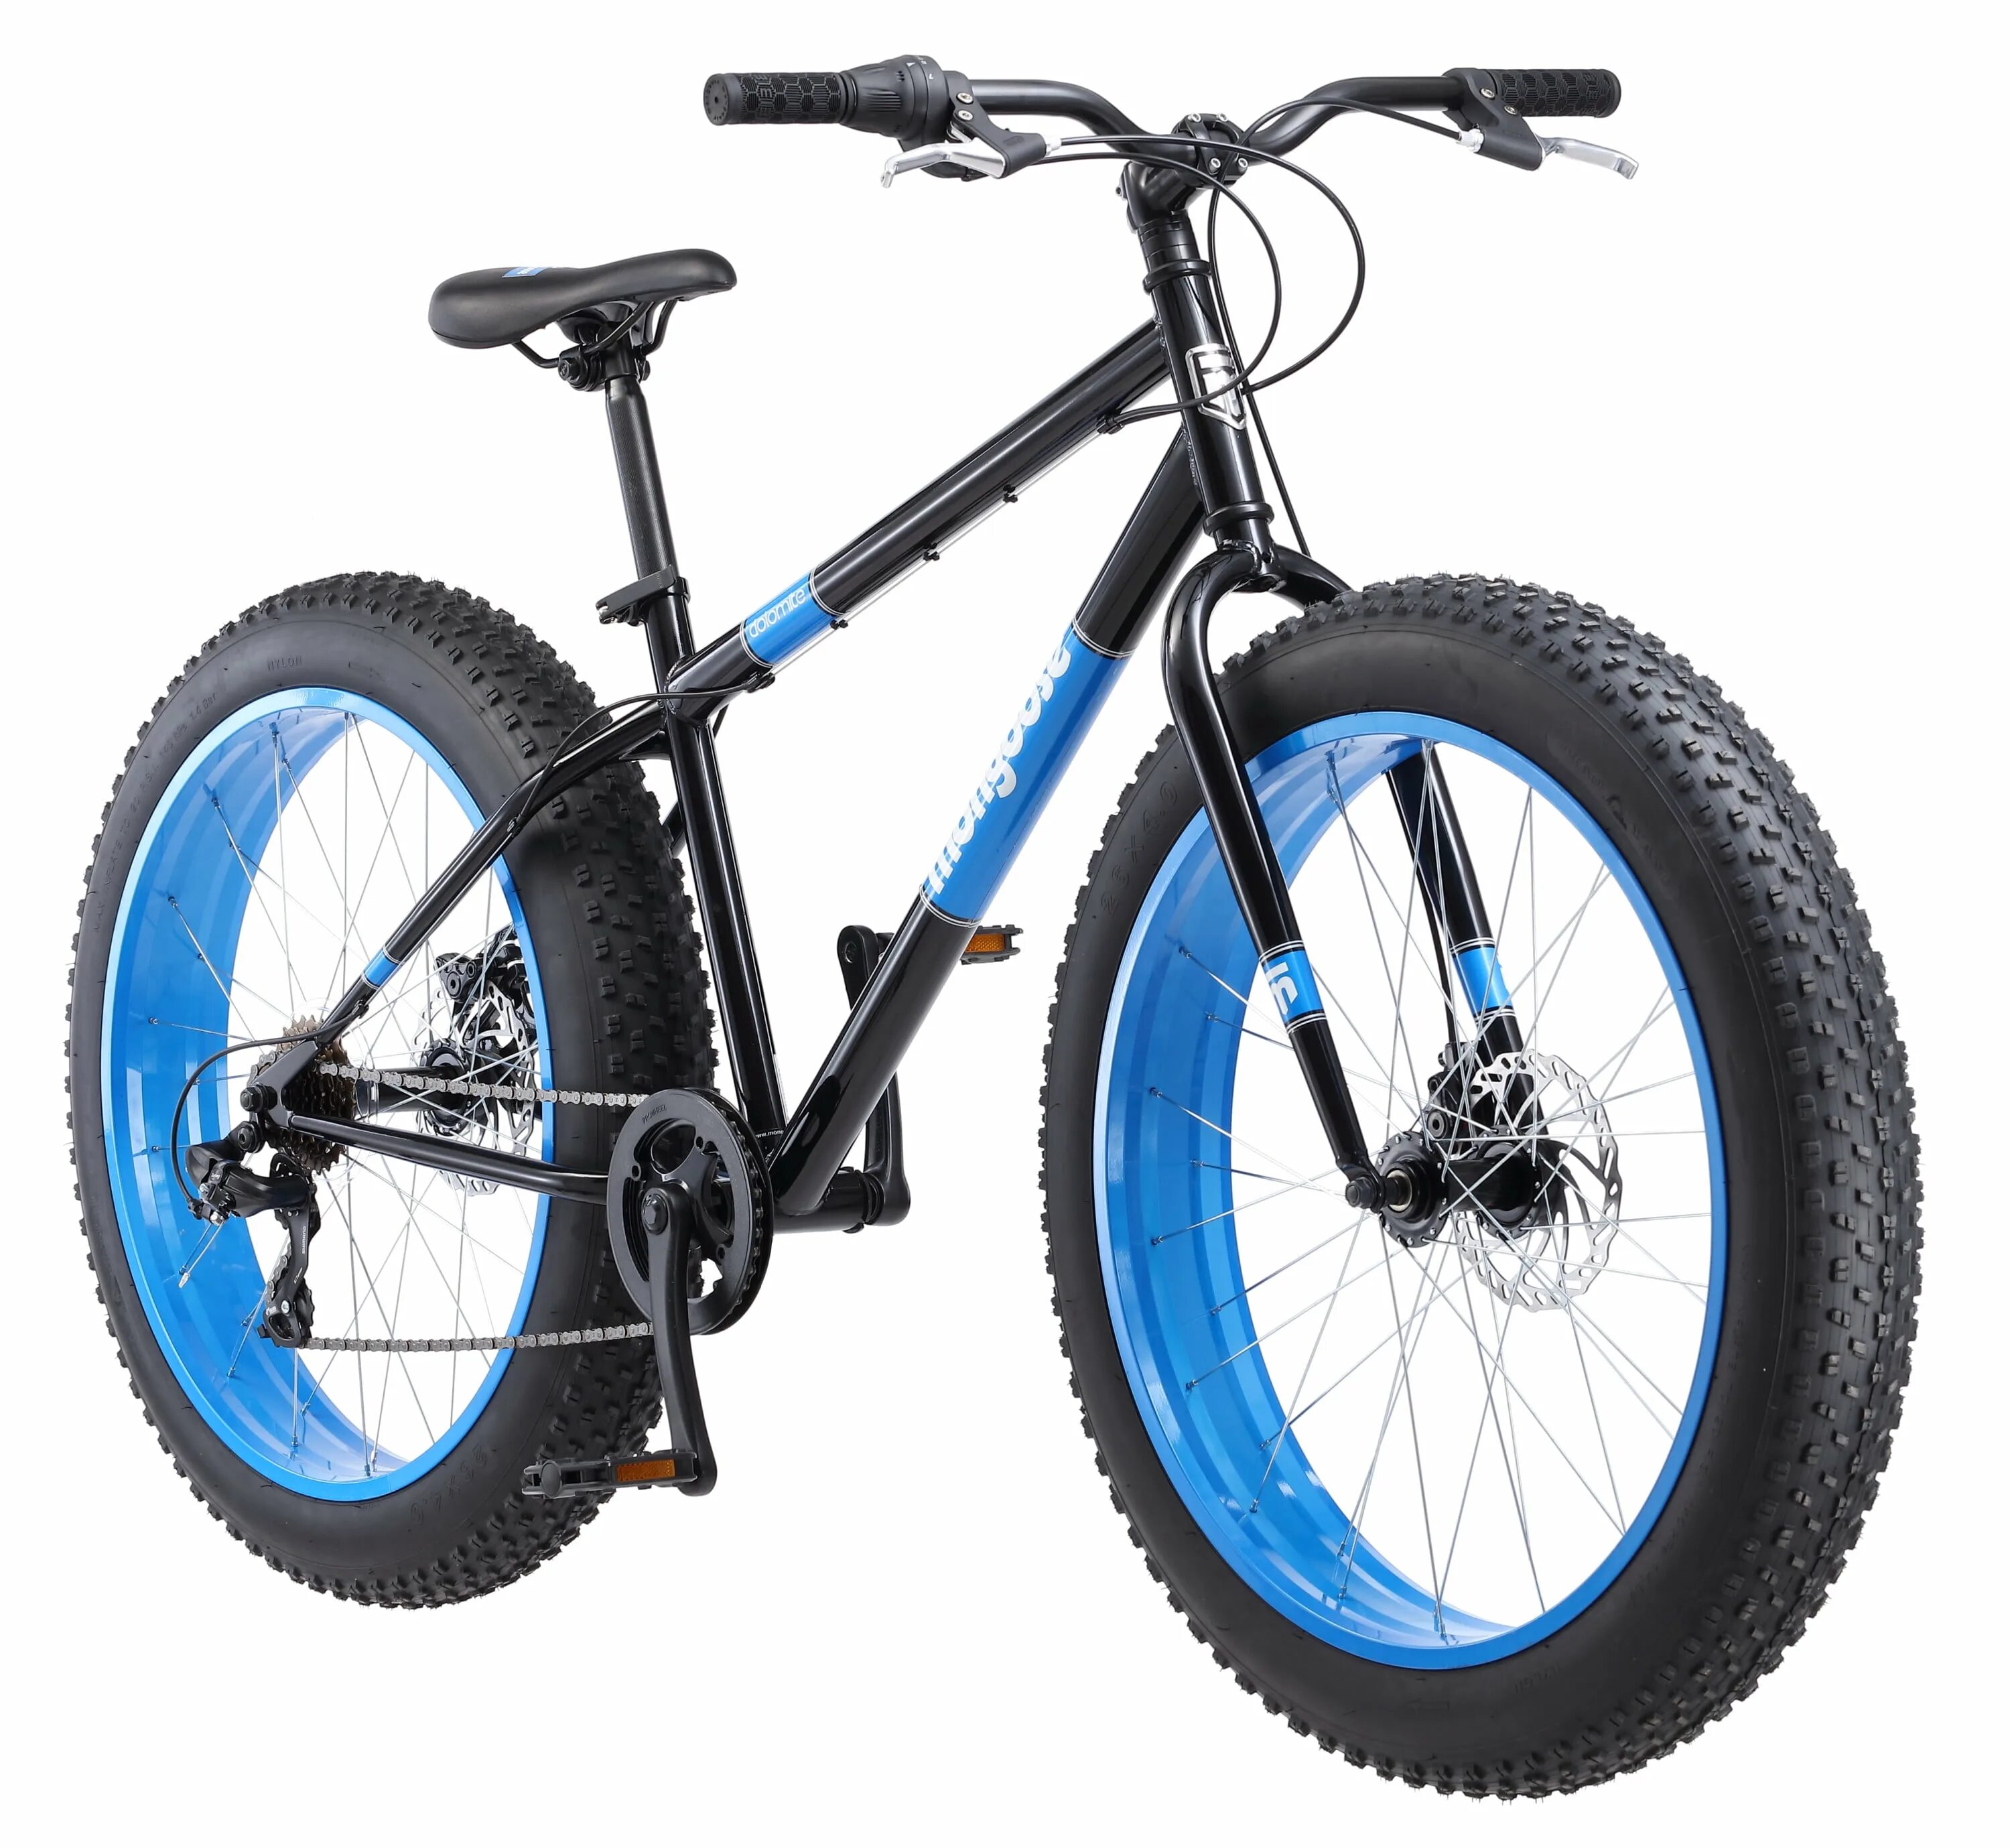 Fat bike 26. Велик Mongoose. Mongoose 26'' x 4'' fat Bicycle Tire - Black (mg78251-2). Велосипеды Монгус на 26 колесах. Велосипед Мангуст синий.